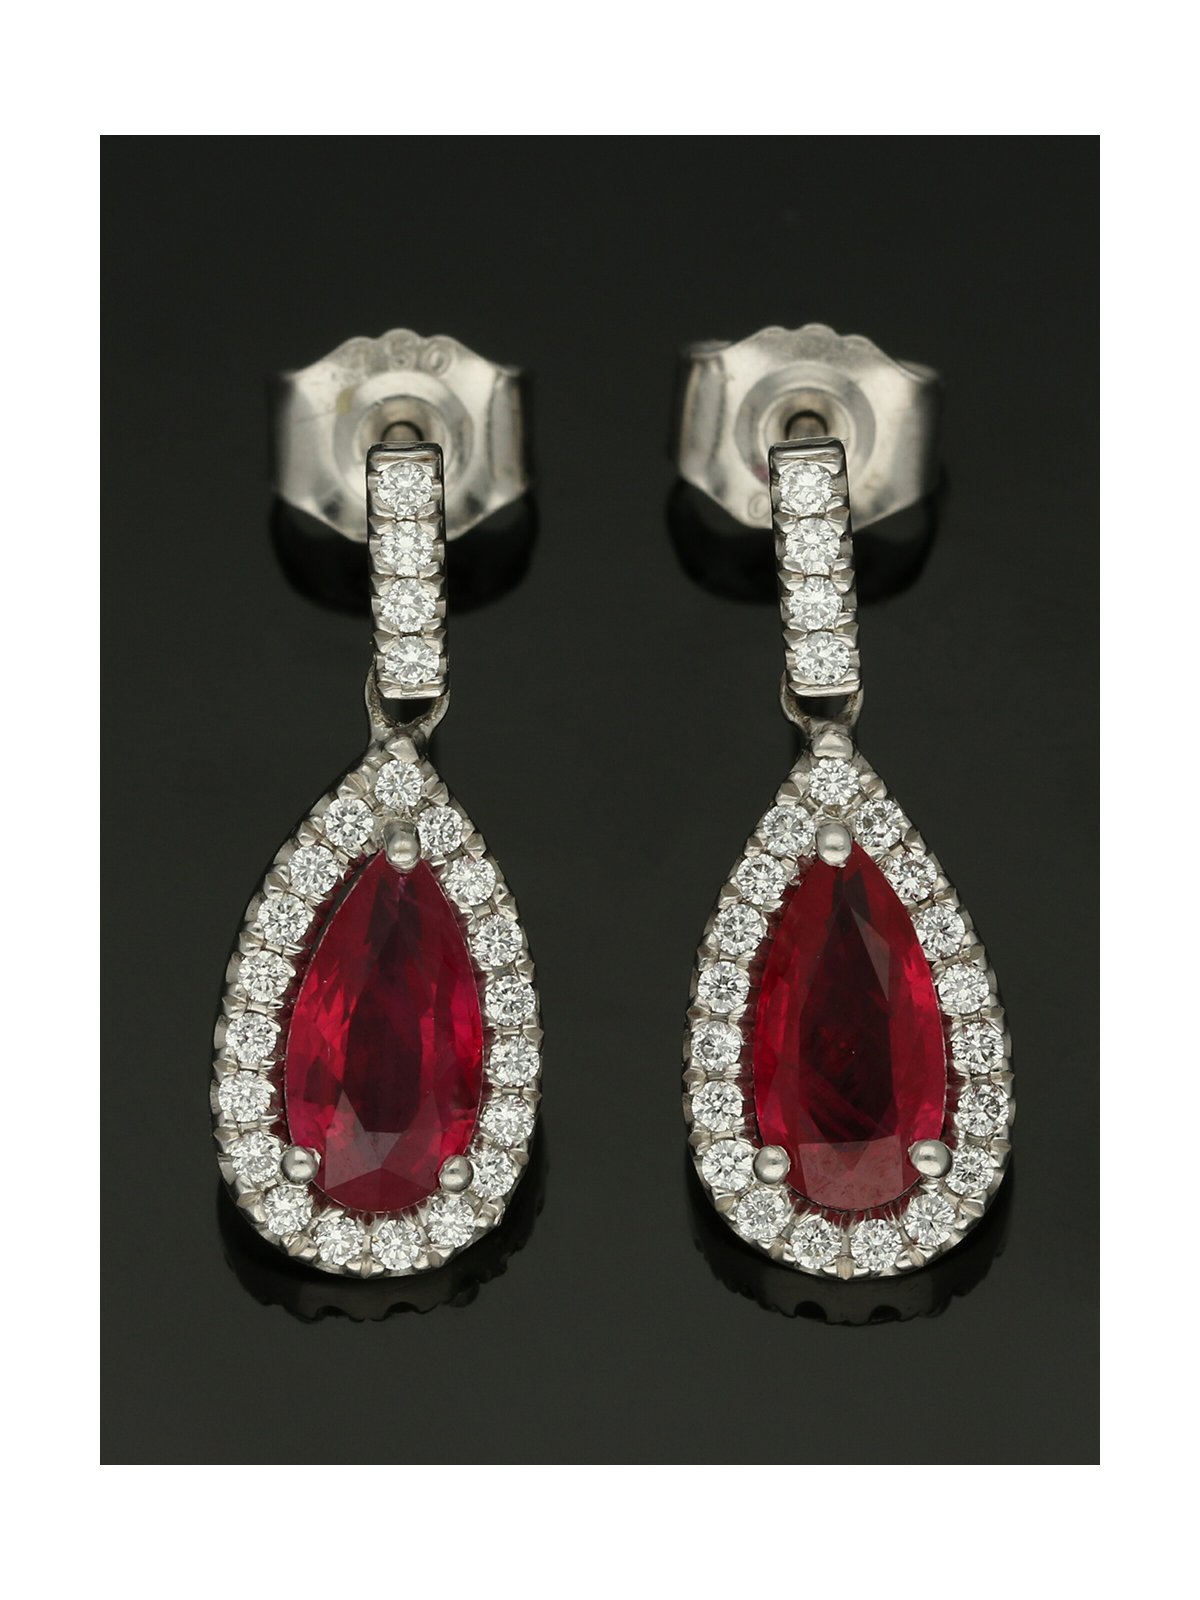 Ruby & Diamond Pear Cluster Drop Earrings in 18ct White Gold